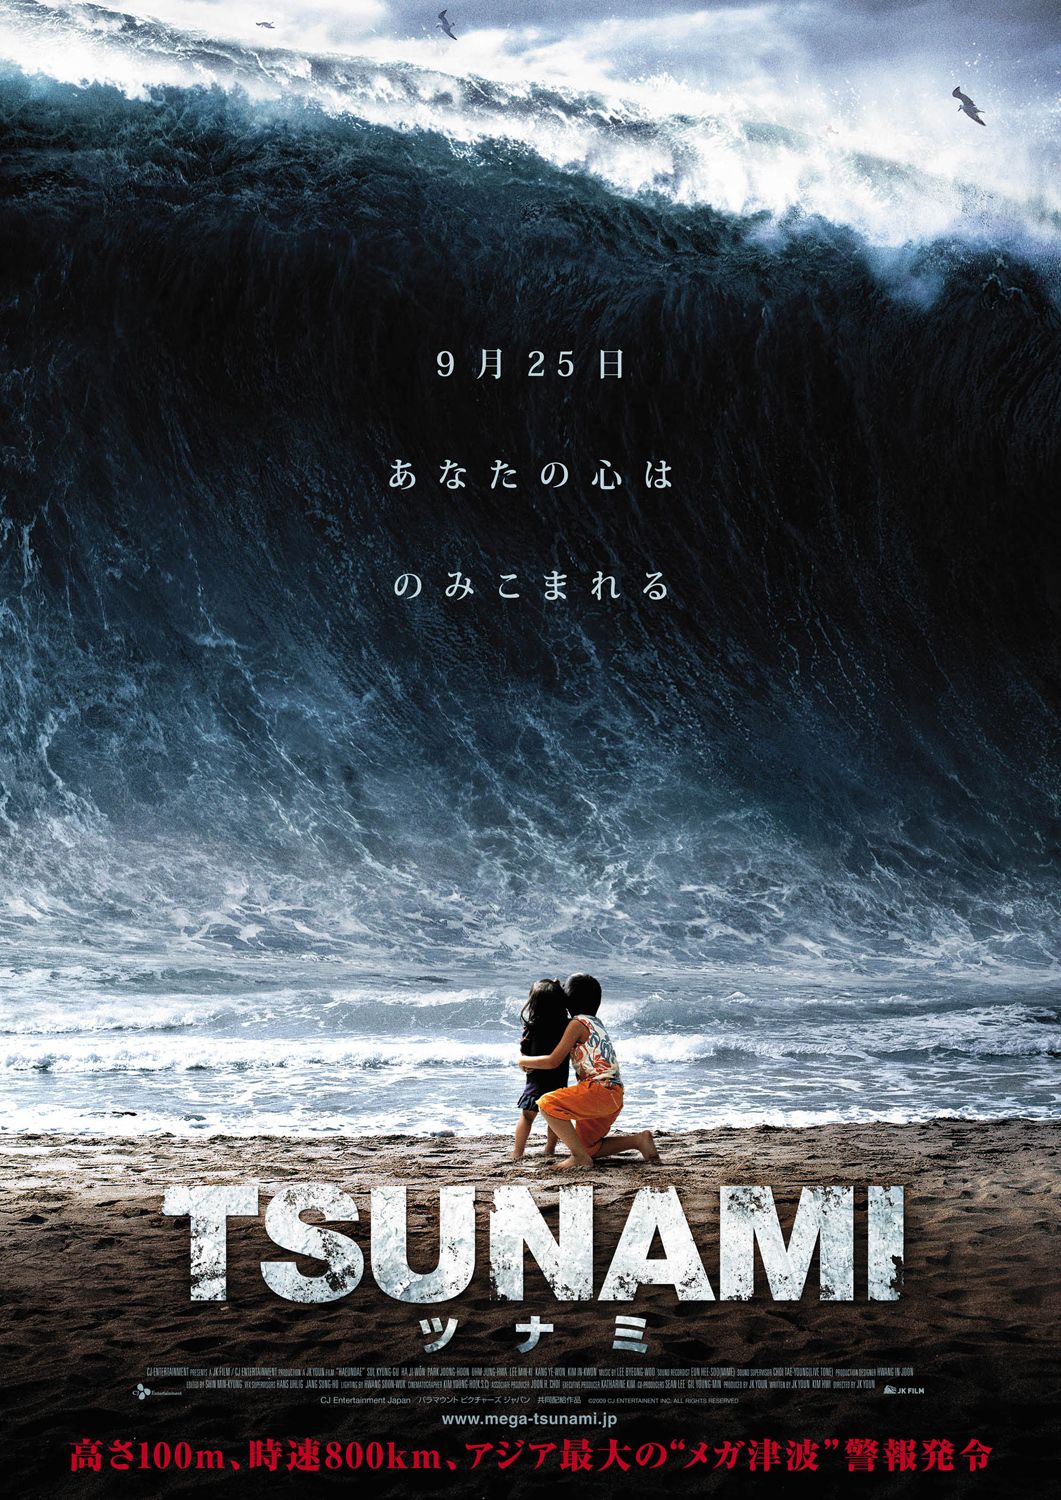 Tsunami Haeundae / Tidal Wave 2009 - Trailer - YouTube